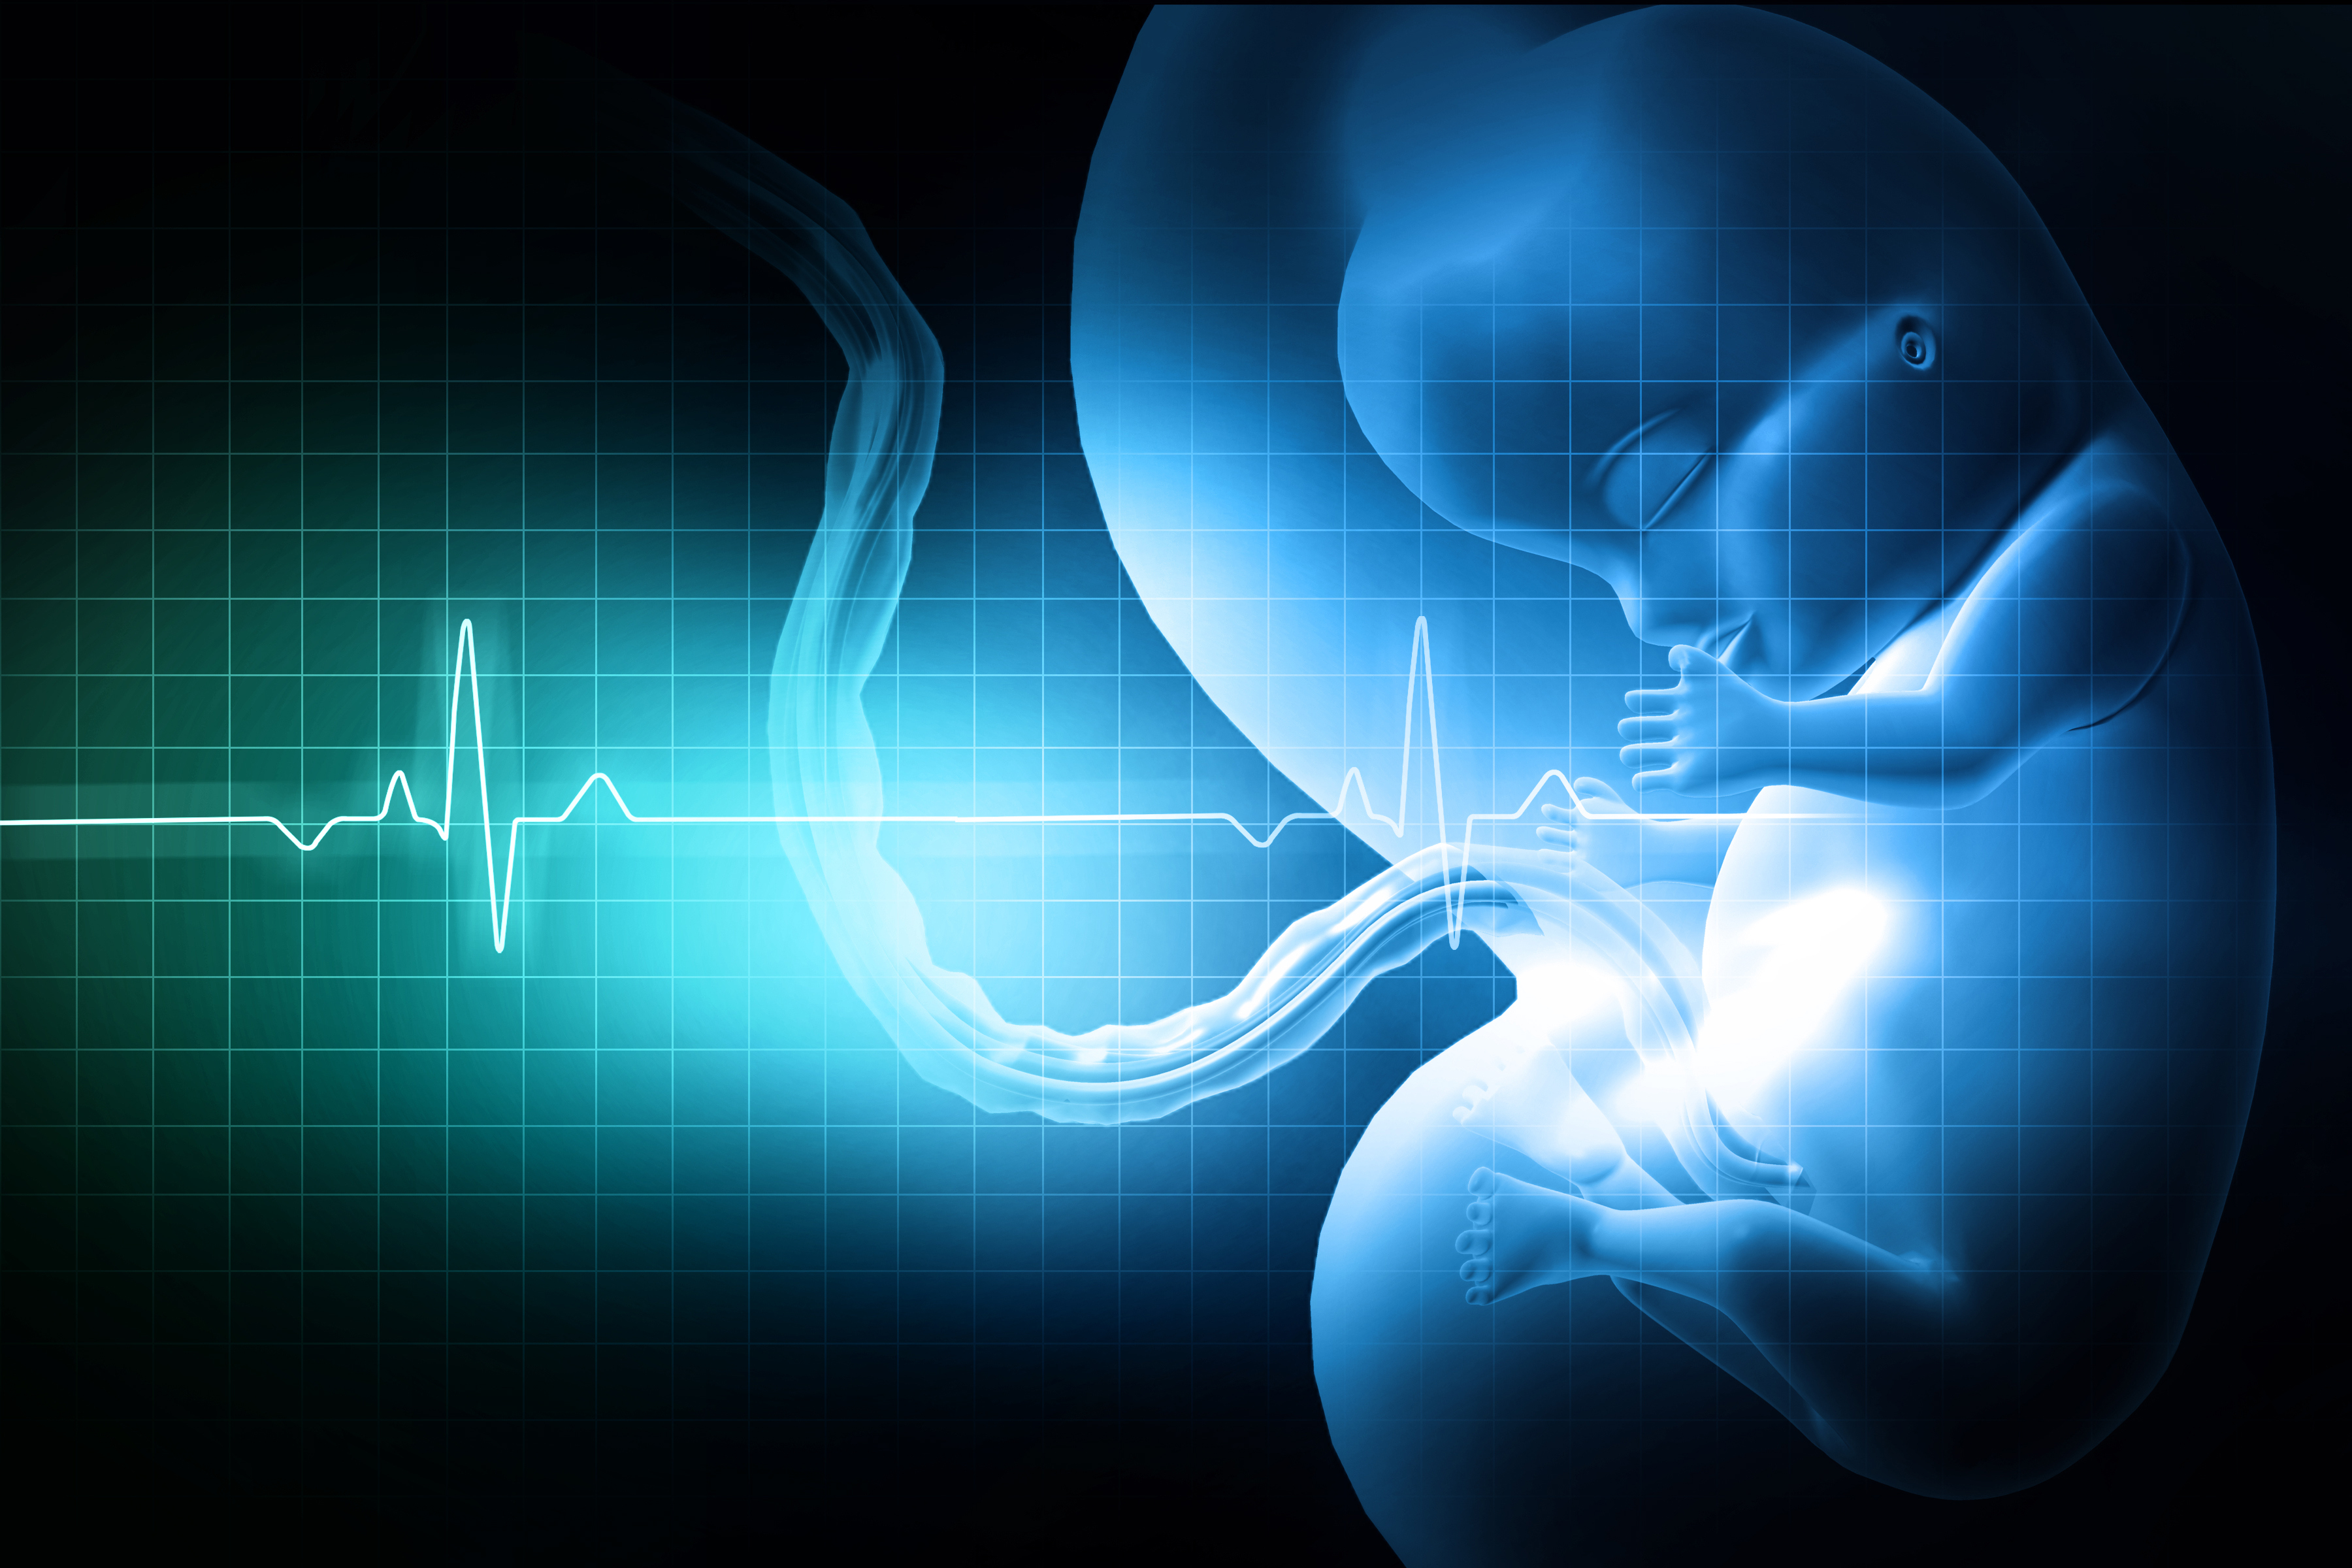 Profile of blue fetus with EKG chart superimposed